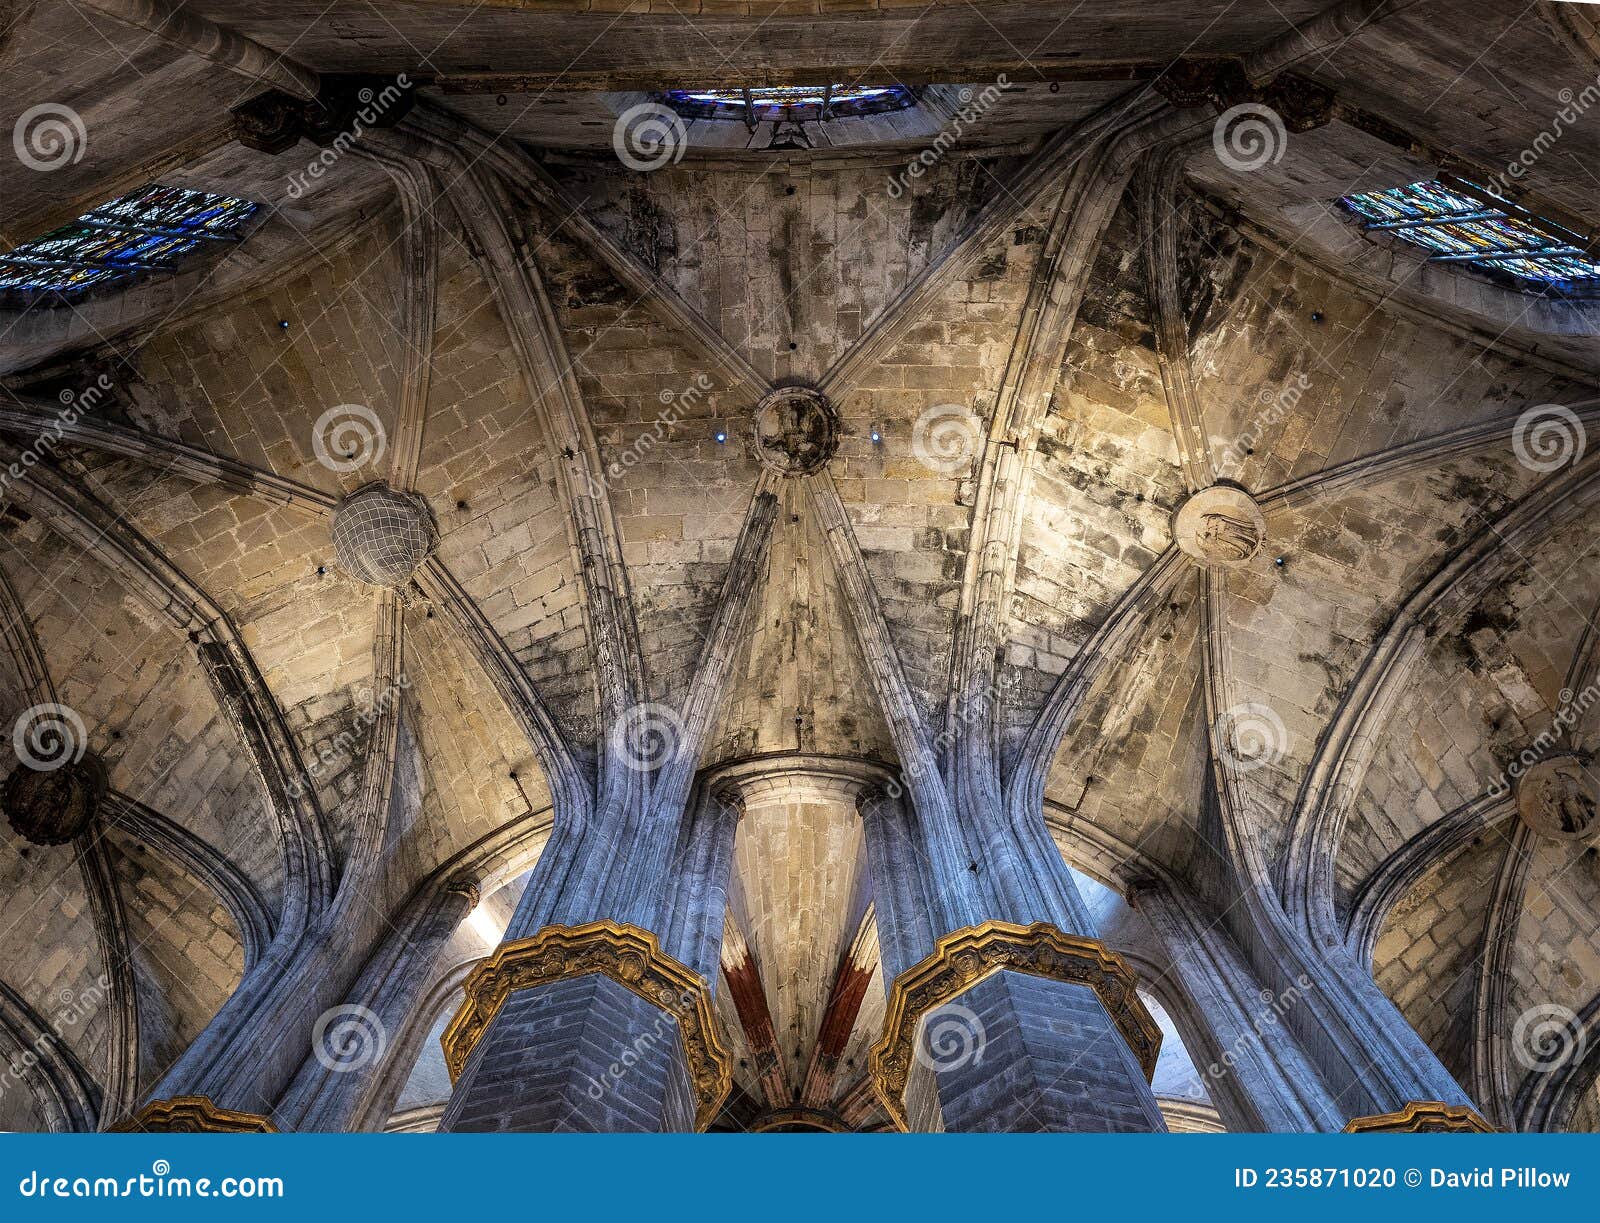 ceiling of the basilica de santa maria del mar in the ribera district of barcelona, spain.